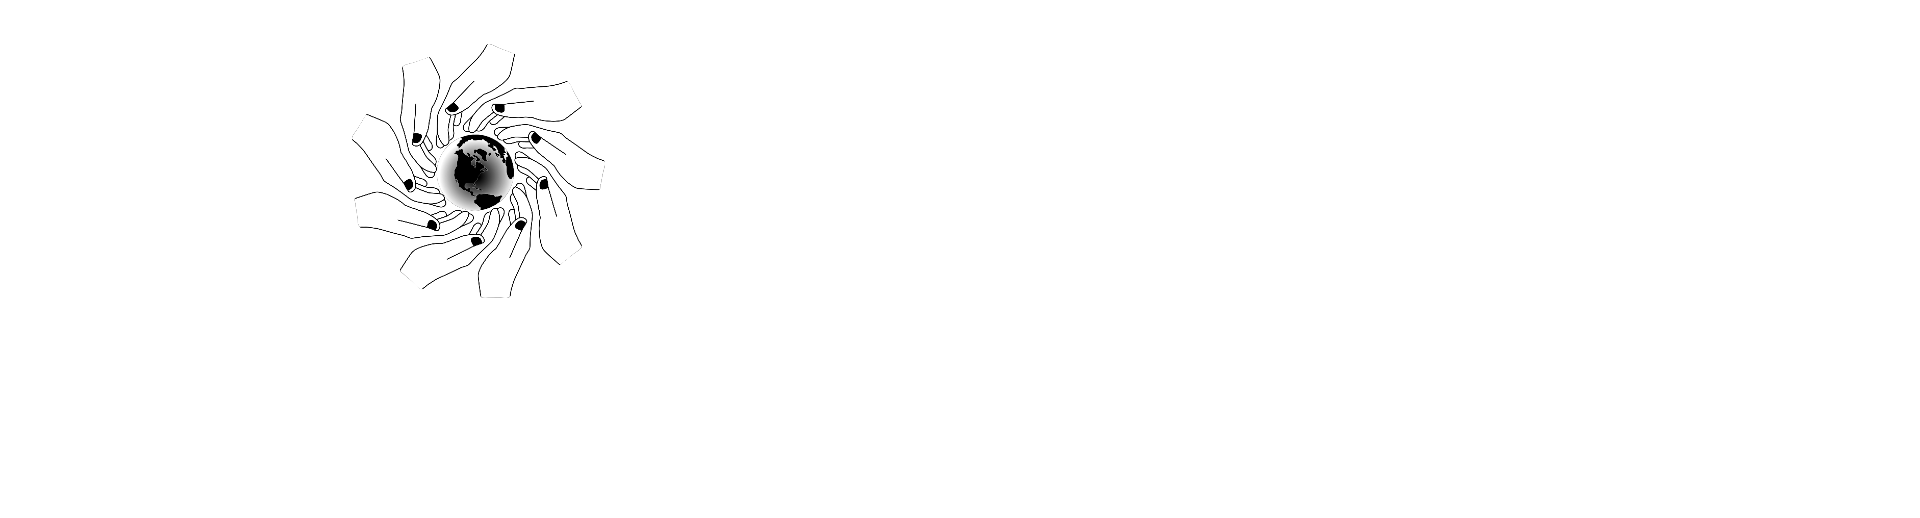 VOLUNTEER: help a veteran & make a difference